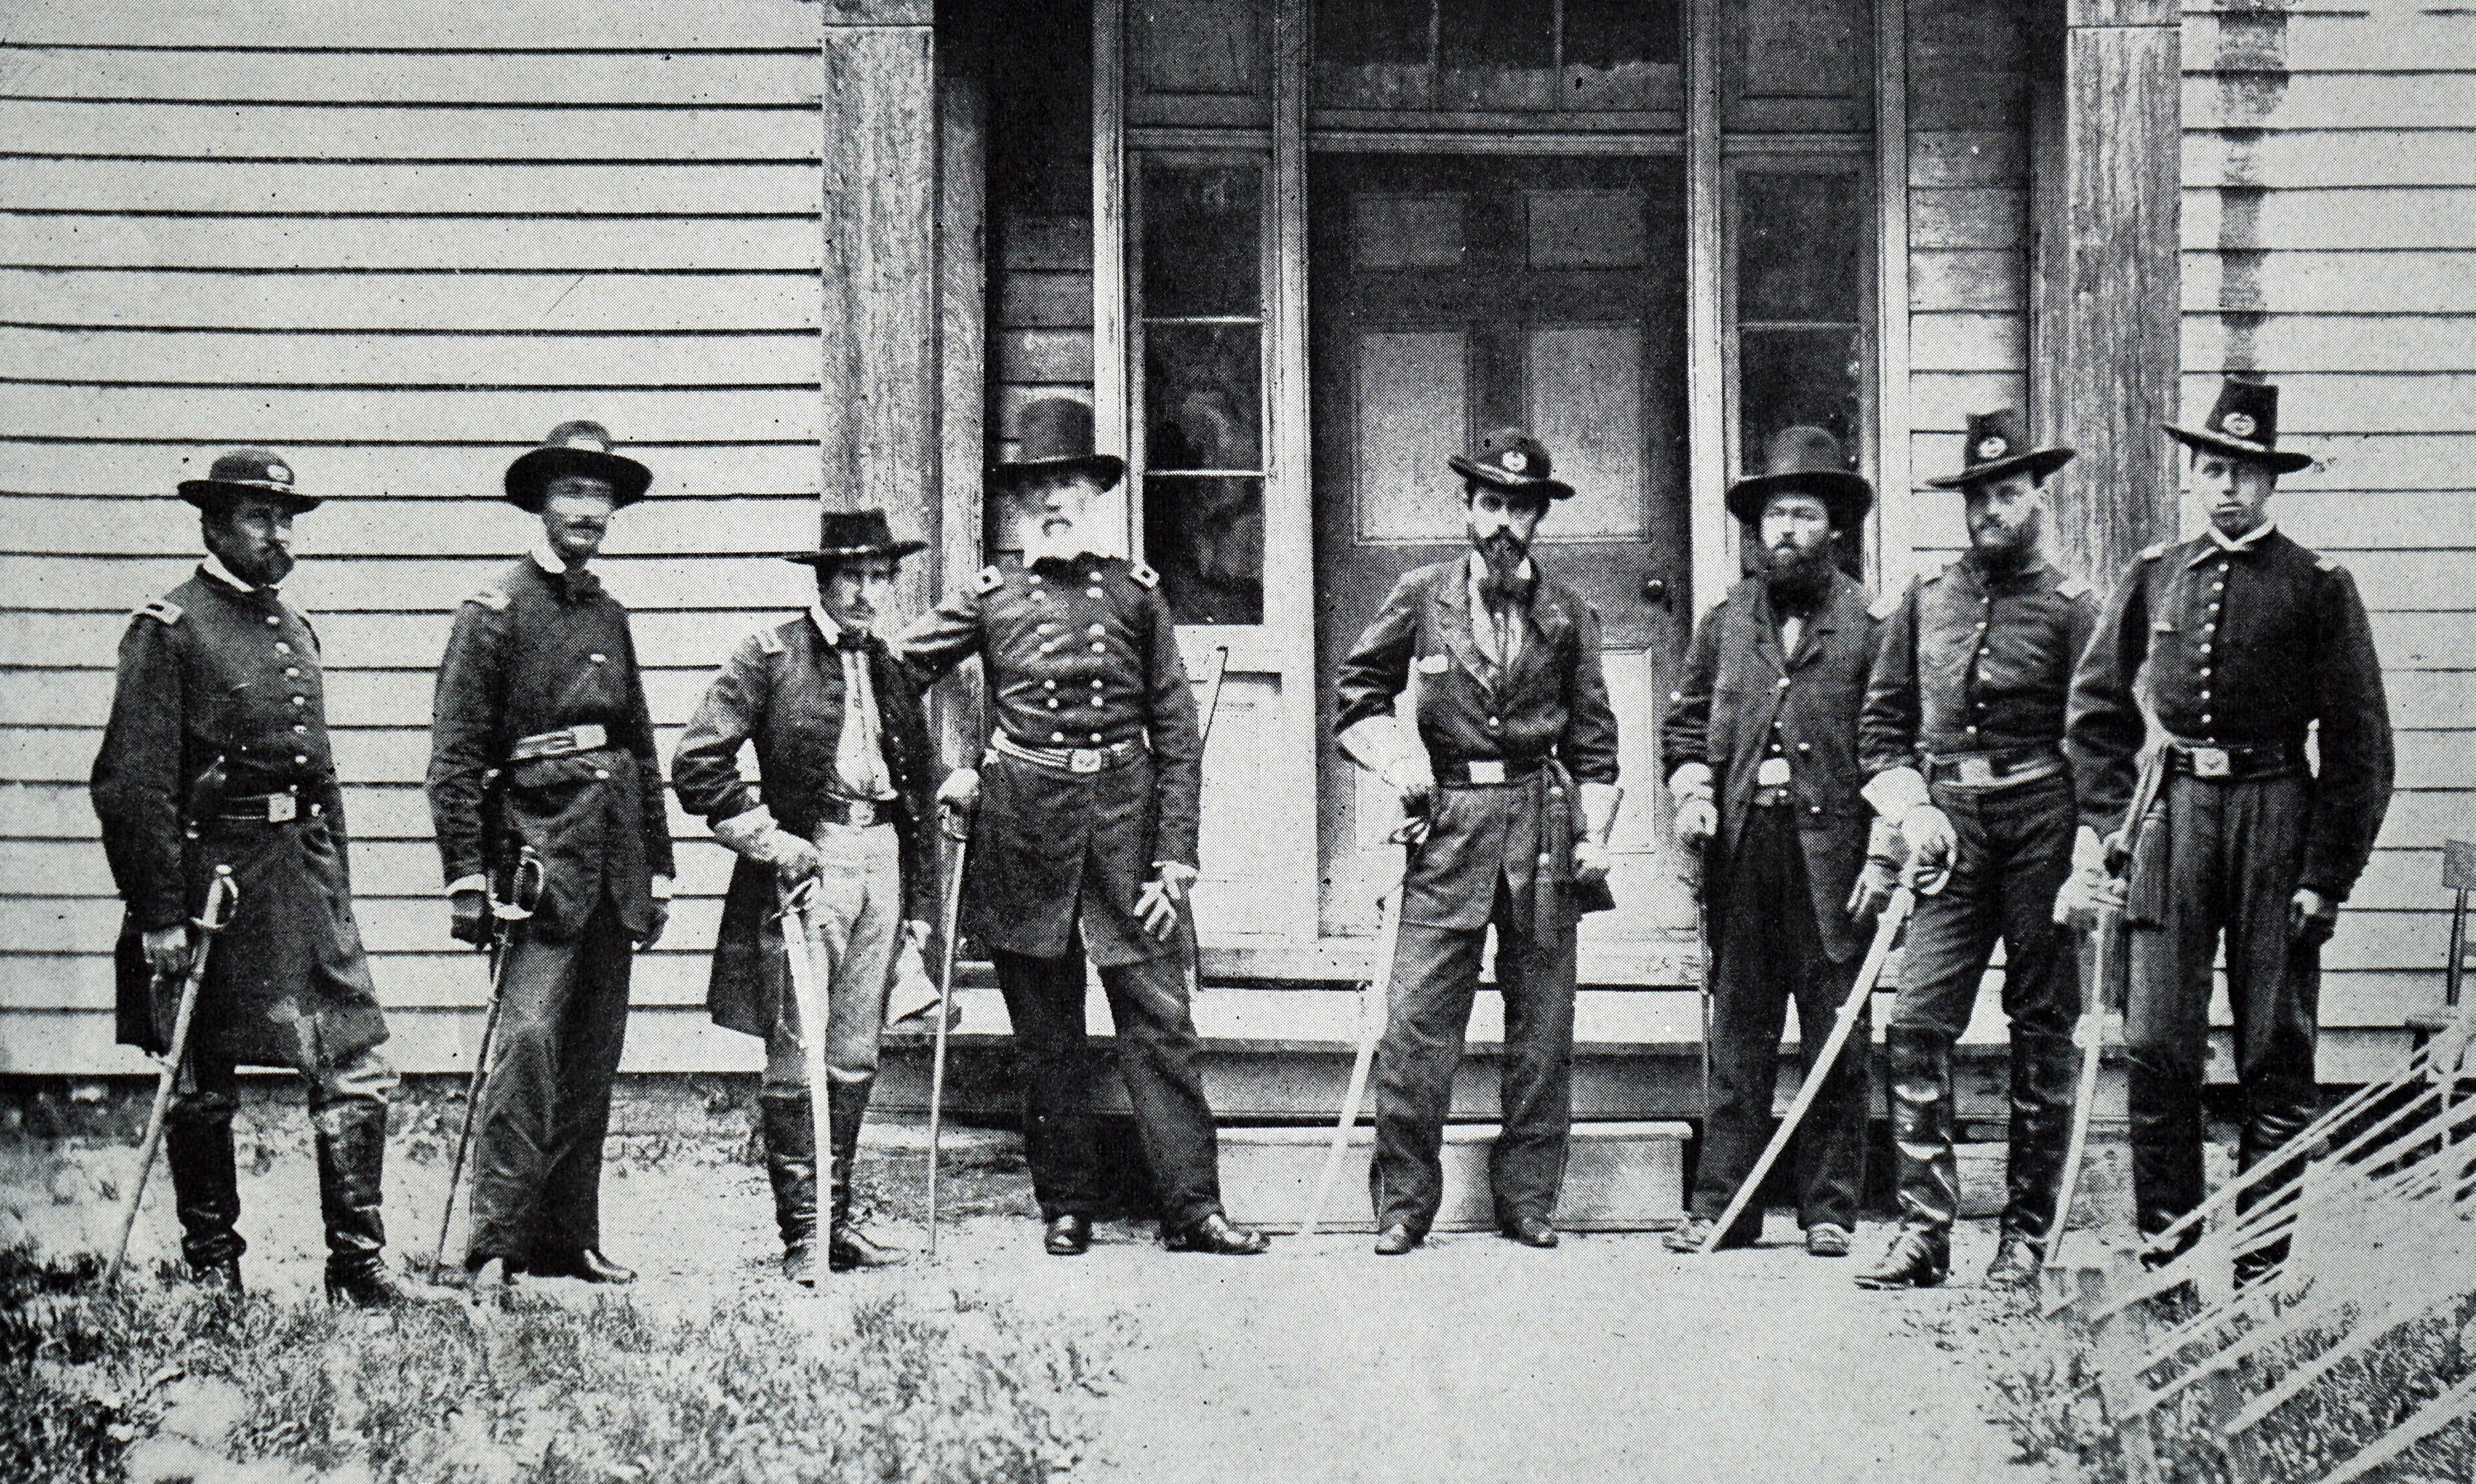 Civil war soldiers standing